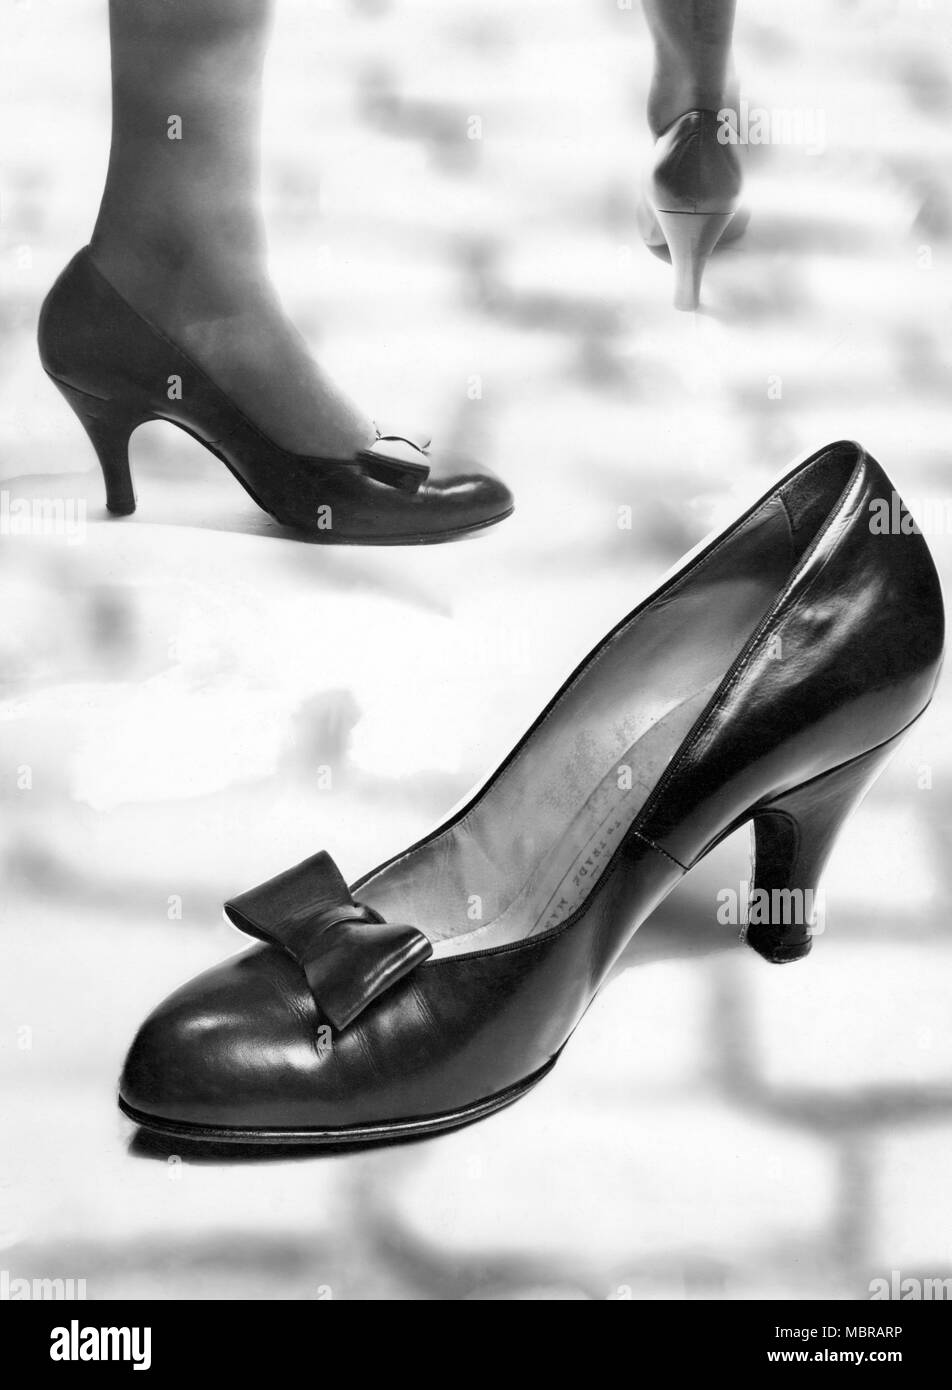 Fashion, shoe fashion, fashion photography of high heels, 1950s, Germany  Stock Photo - Alamy